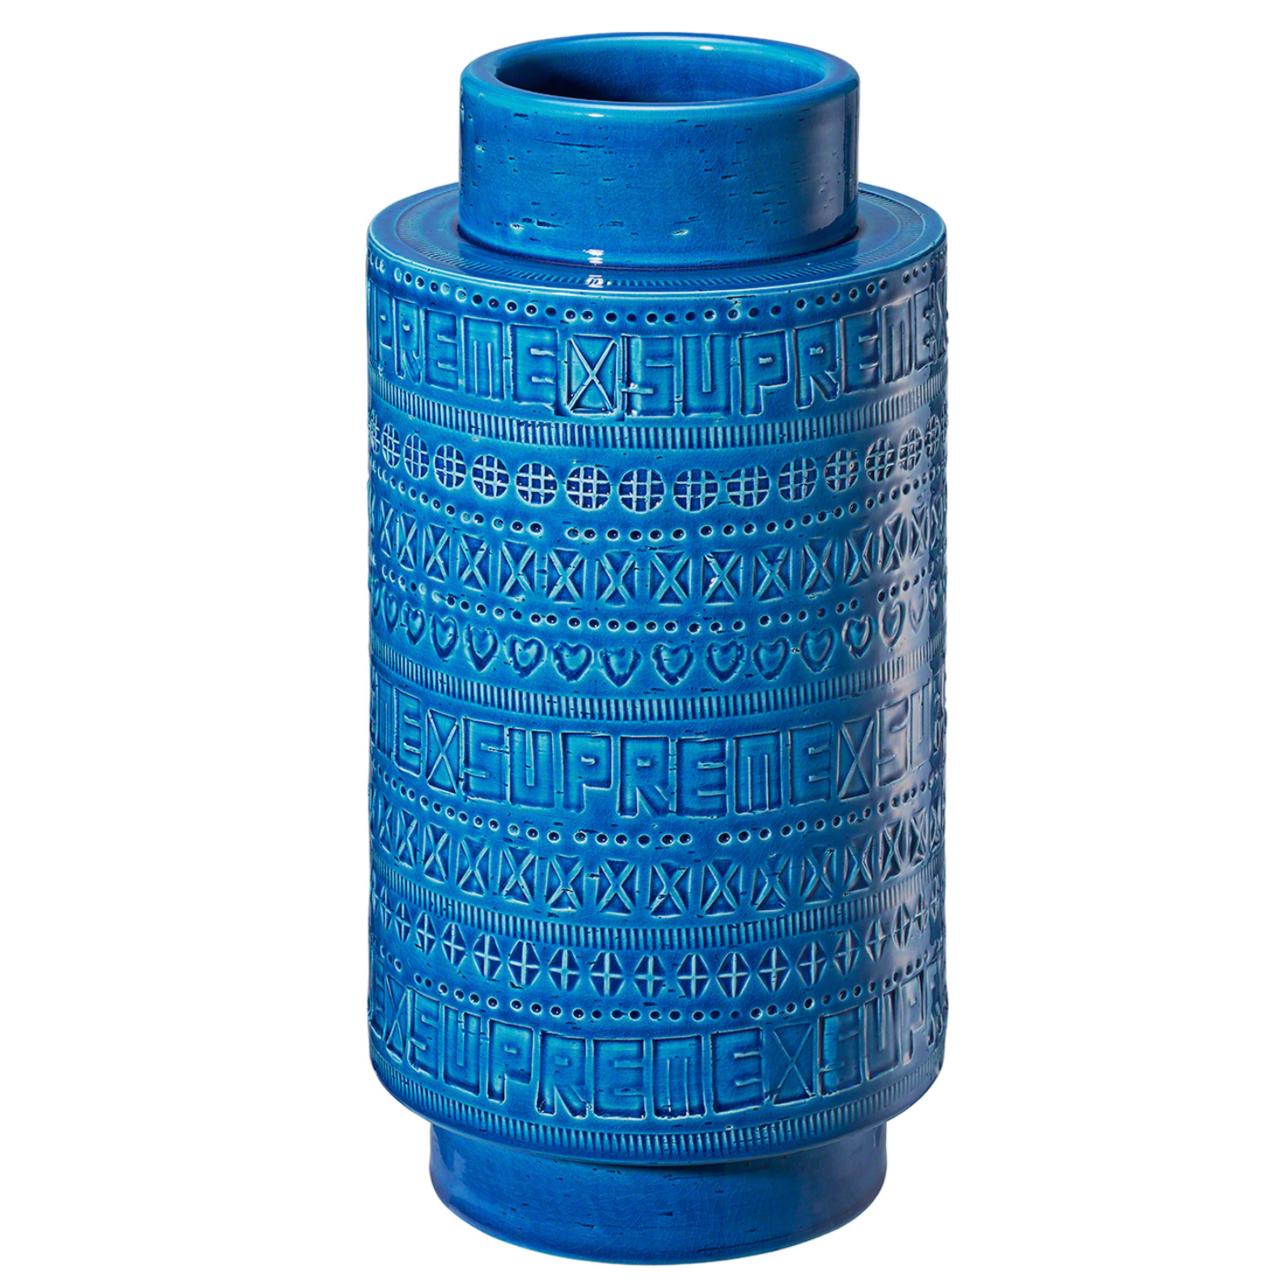 Supreme x Bitossi Frühjahr 2023 Rimini-Blaue Vase, limitierte Auflage. (Keramik) im Angebot